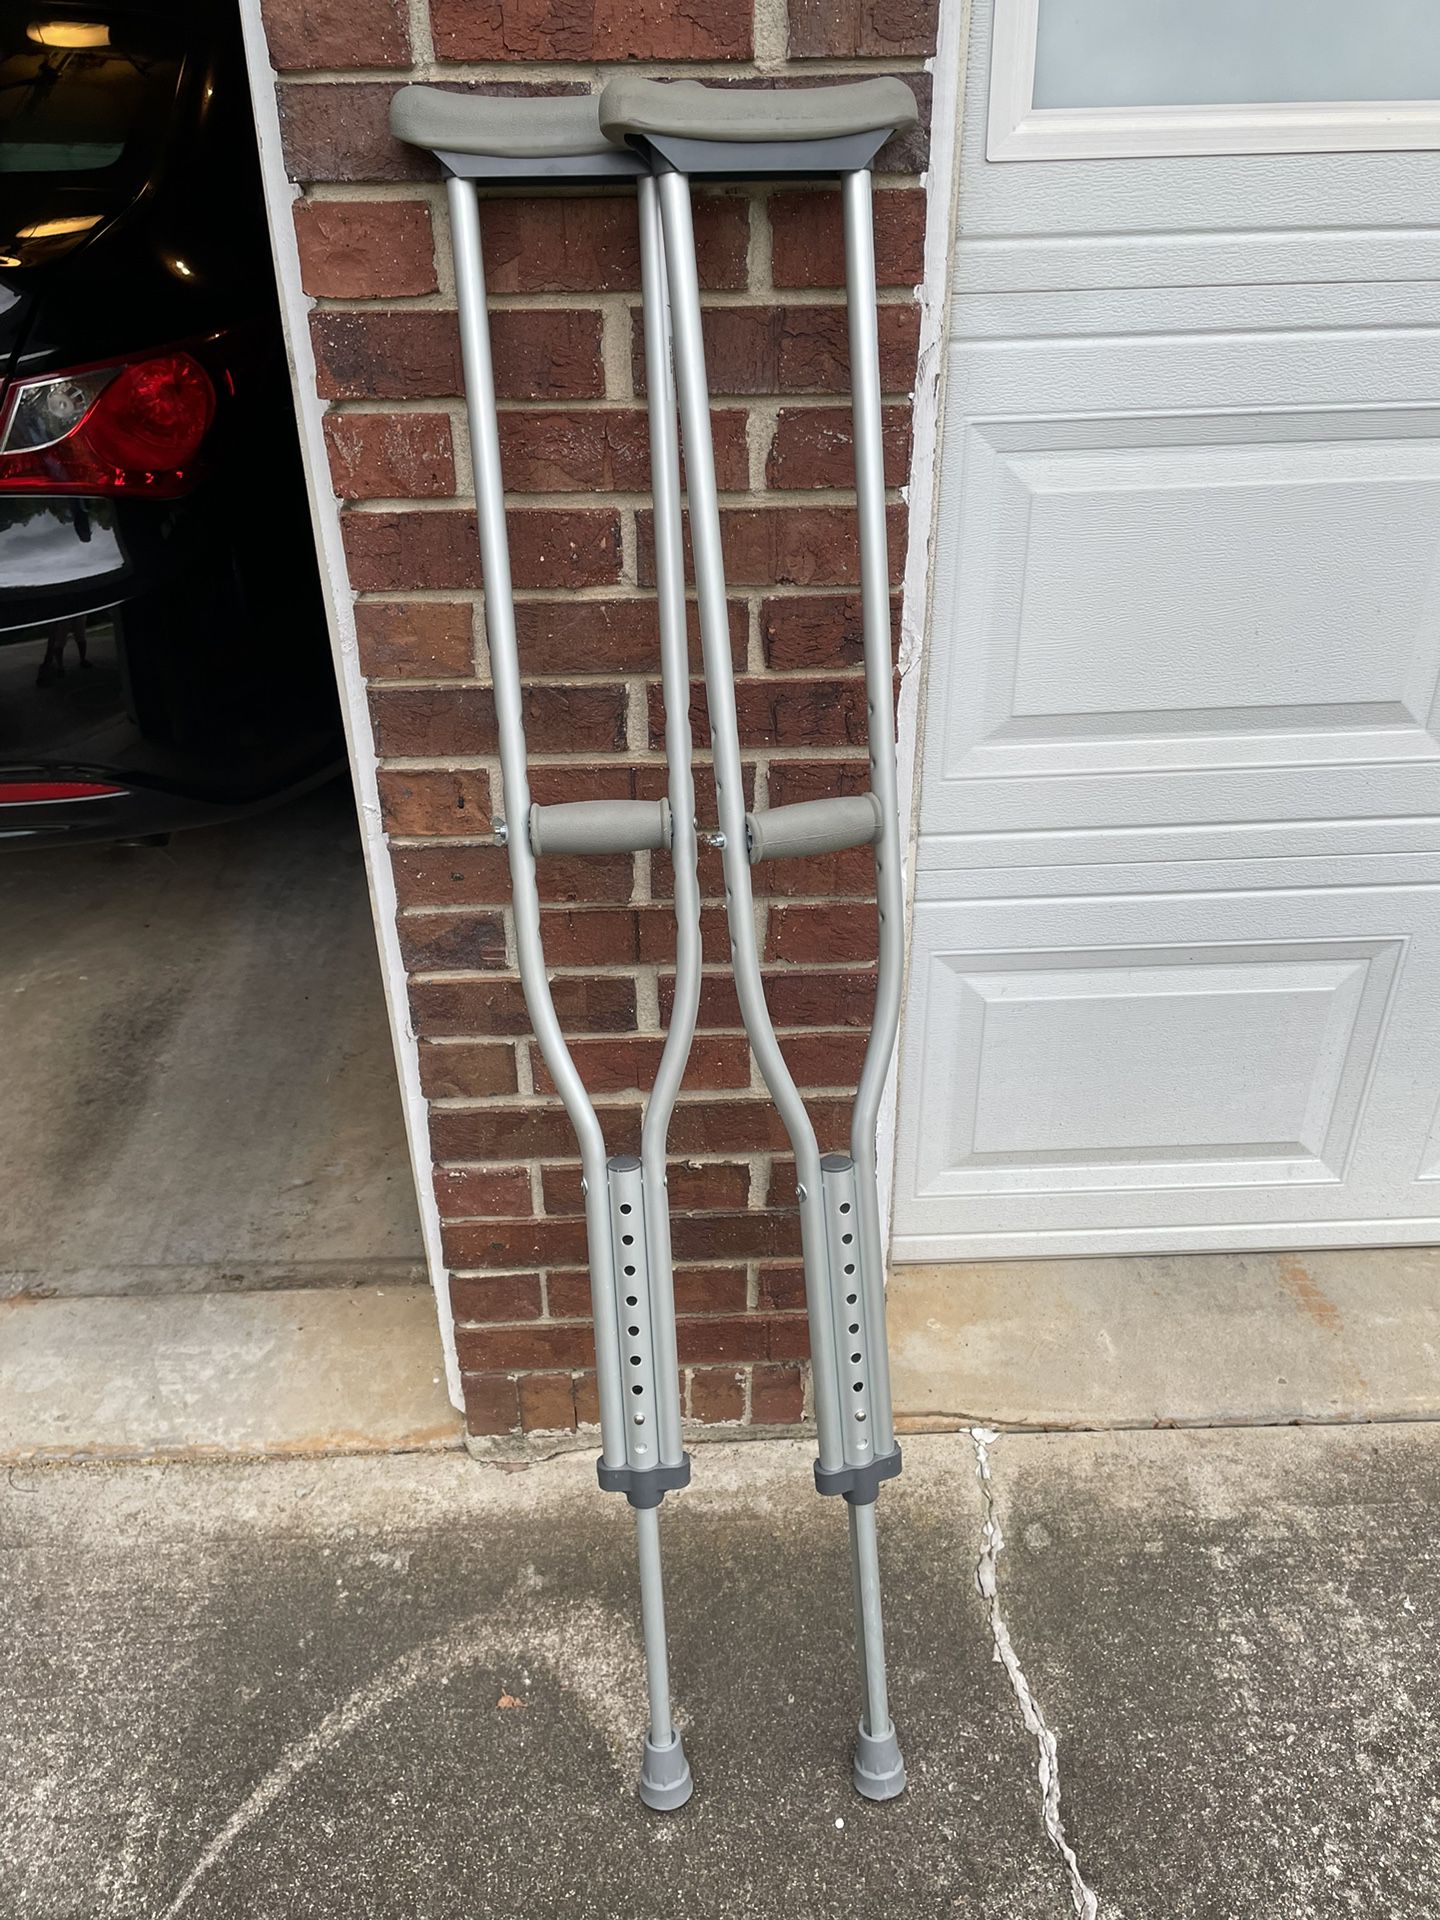 Two Crutches